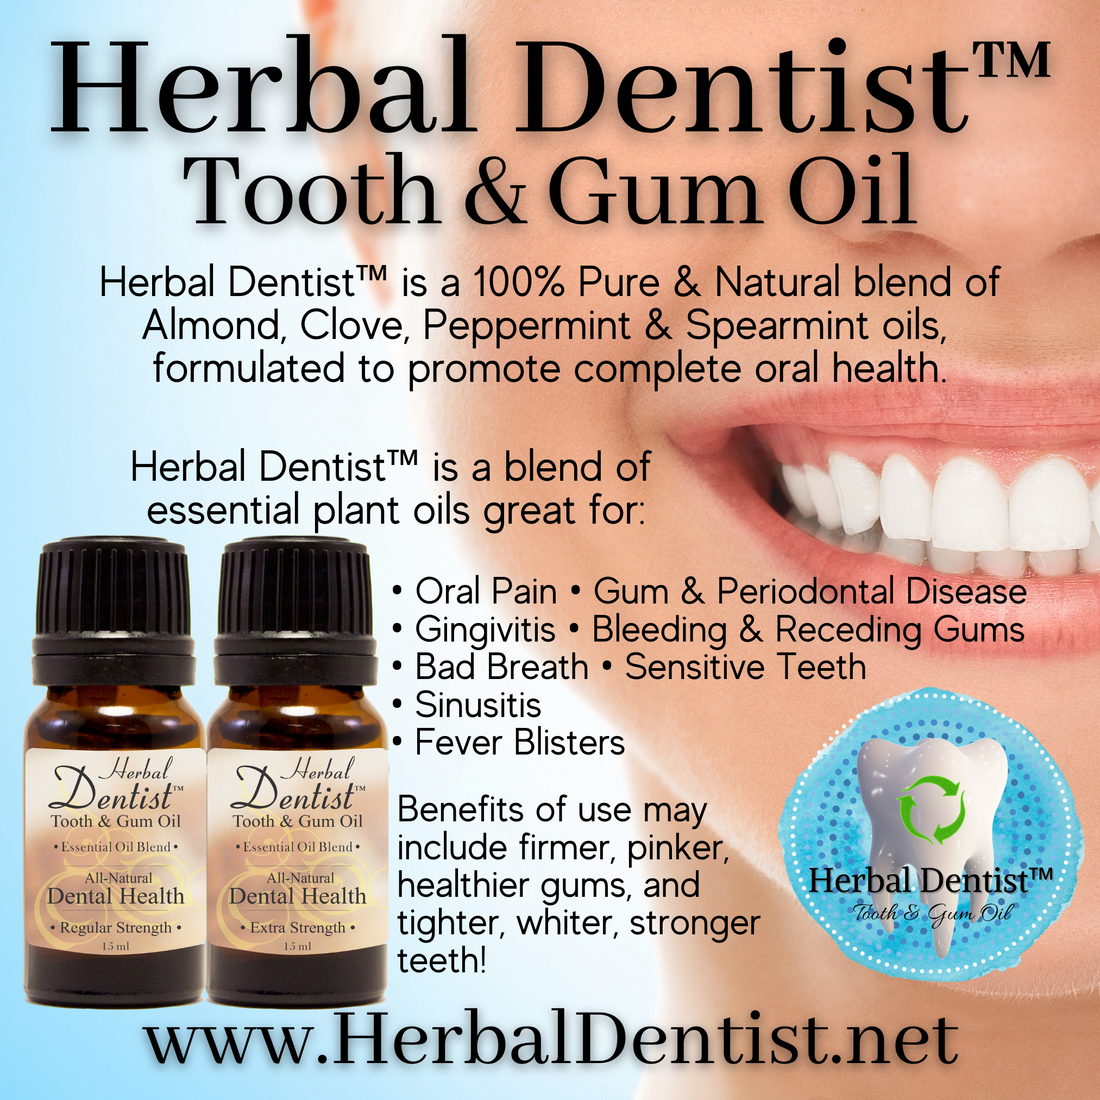 What is Herbal Dentist tooth & gum oil?